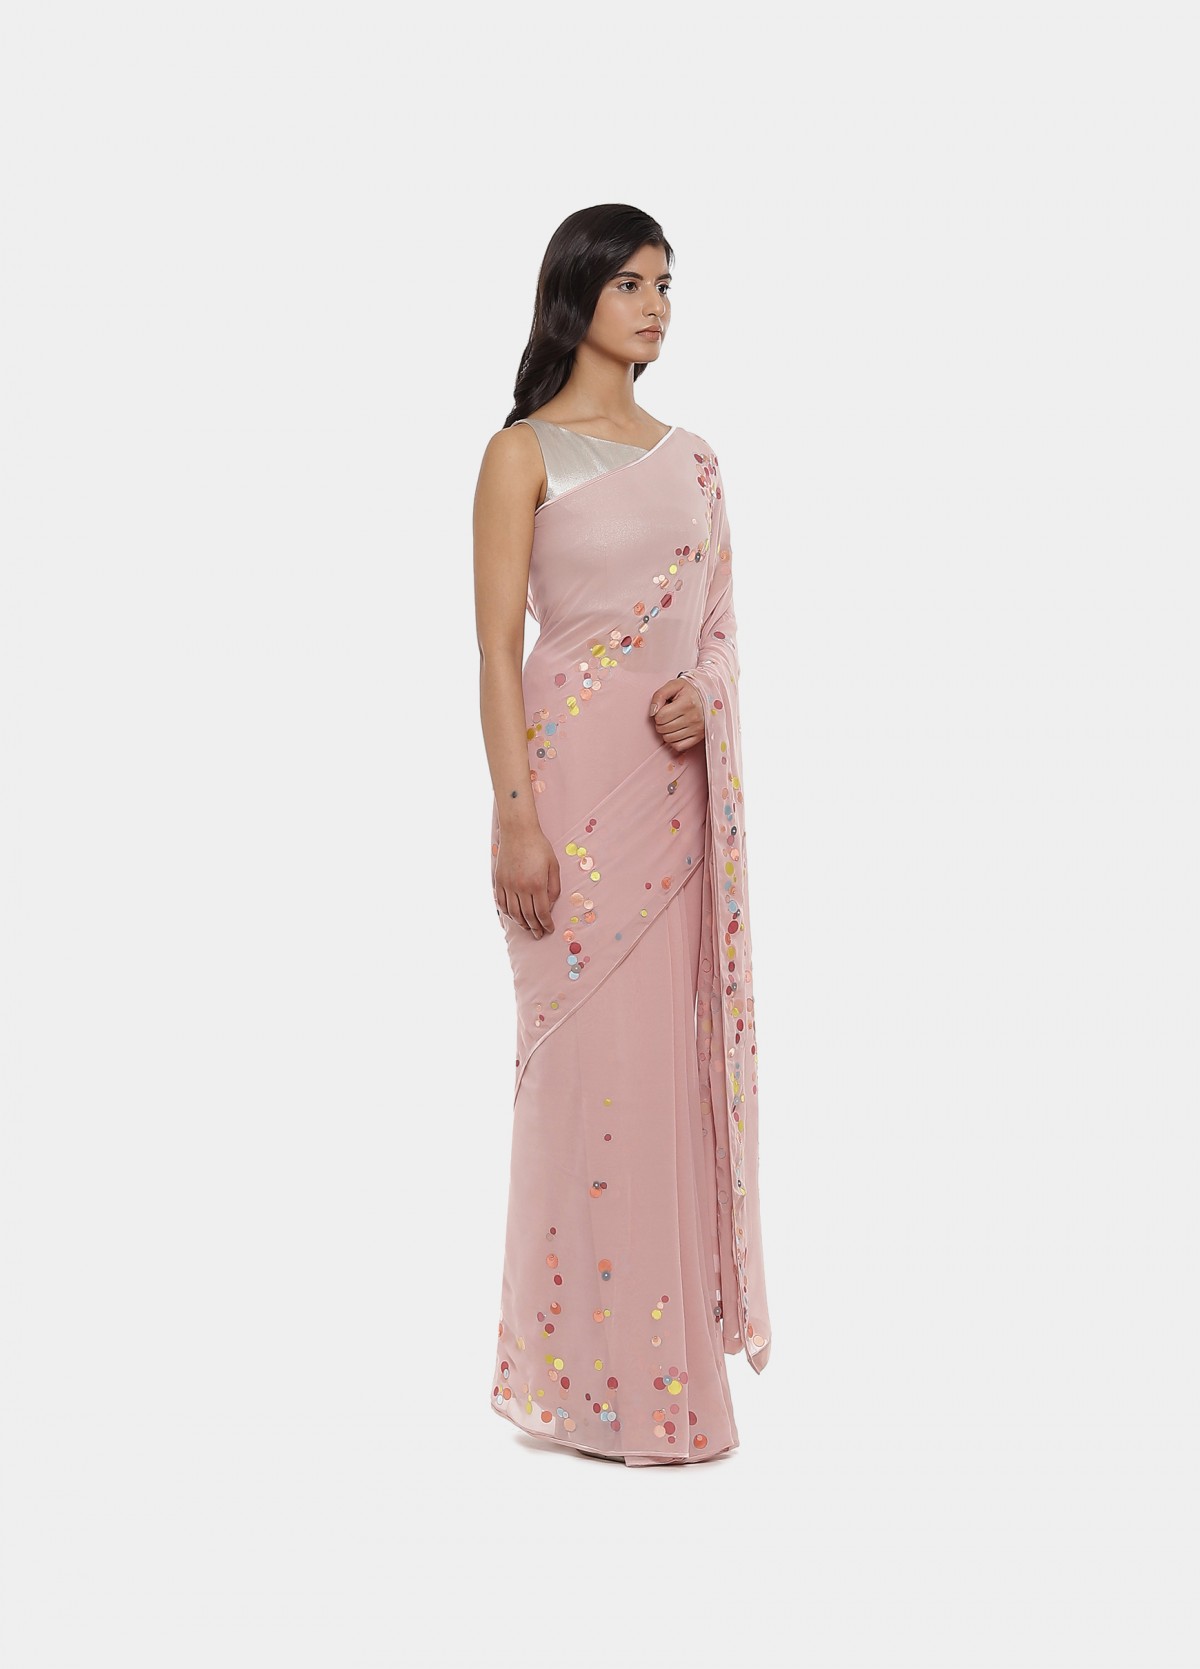 The Iridescent Sari